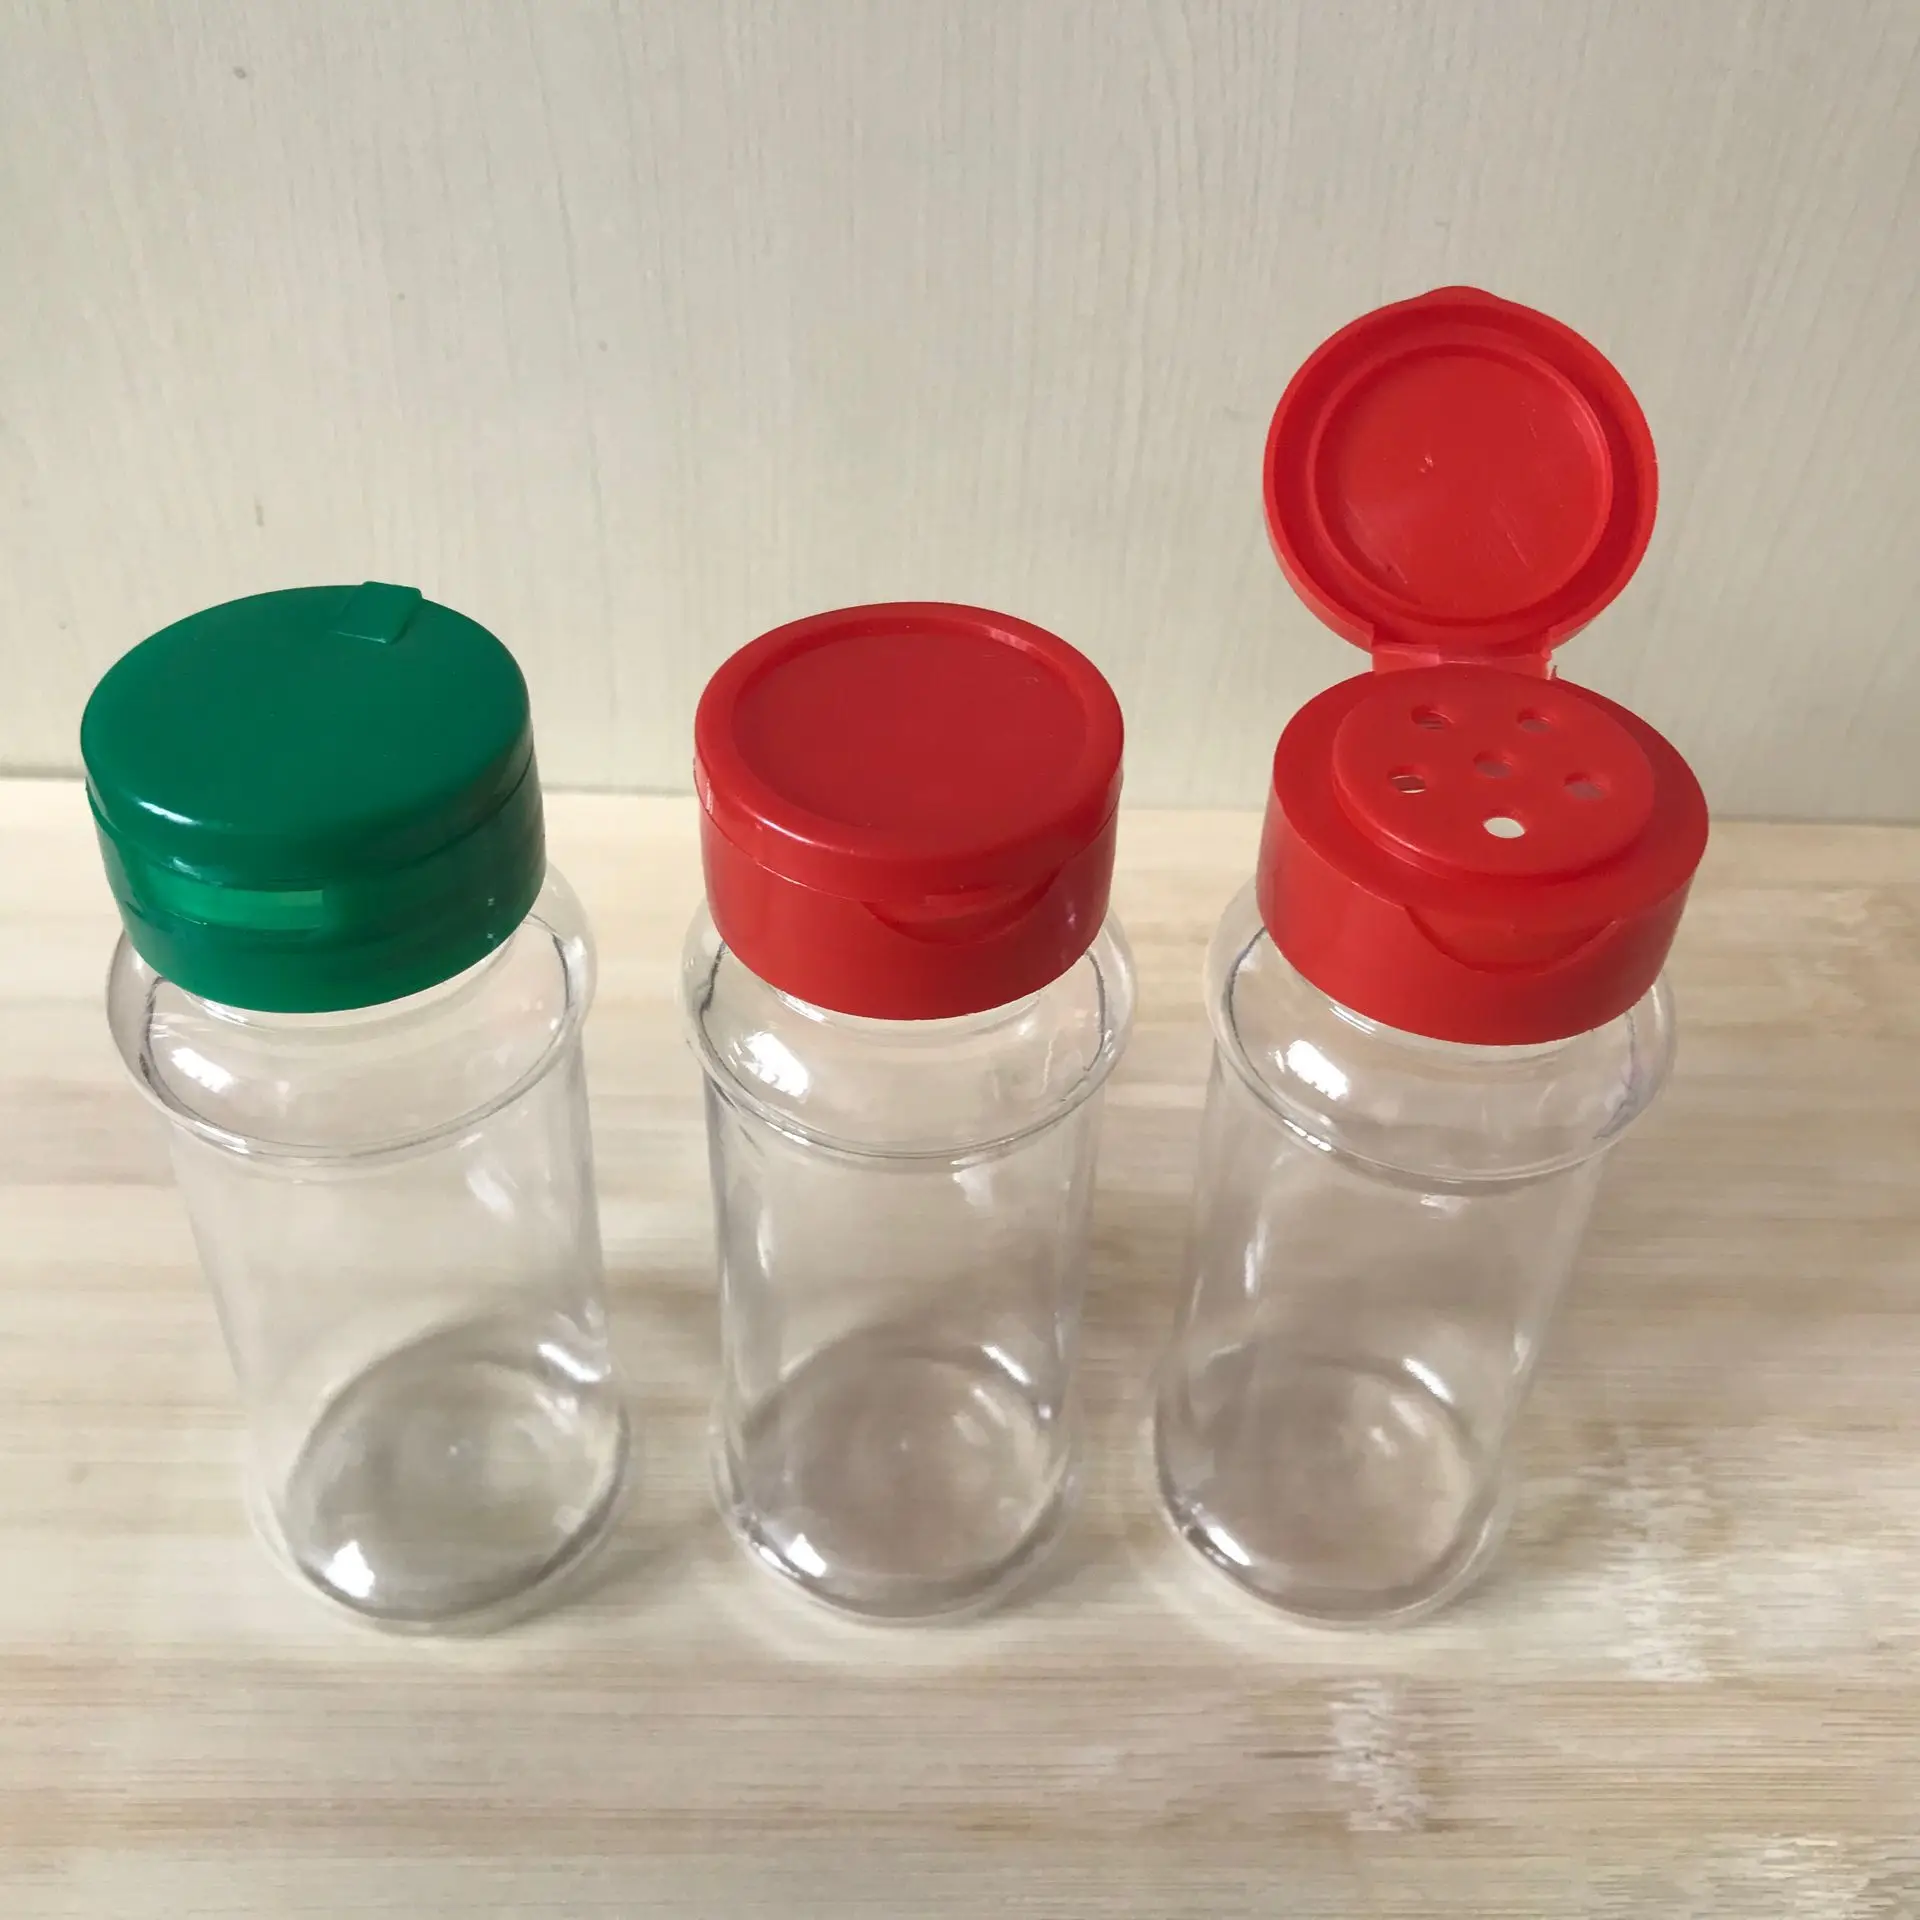 Empty wholesale PET plastic spice bottles seasoning container pepper jar salt shaker with flapper cap